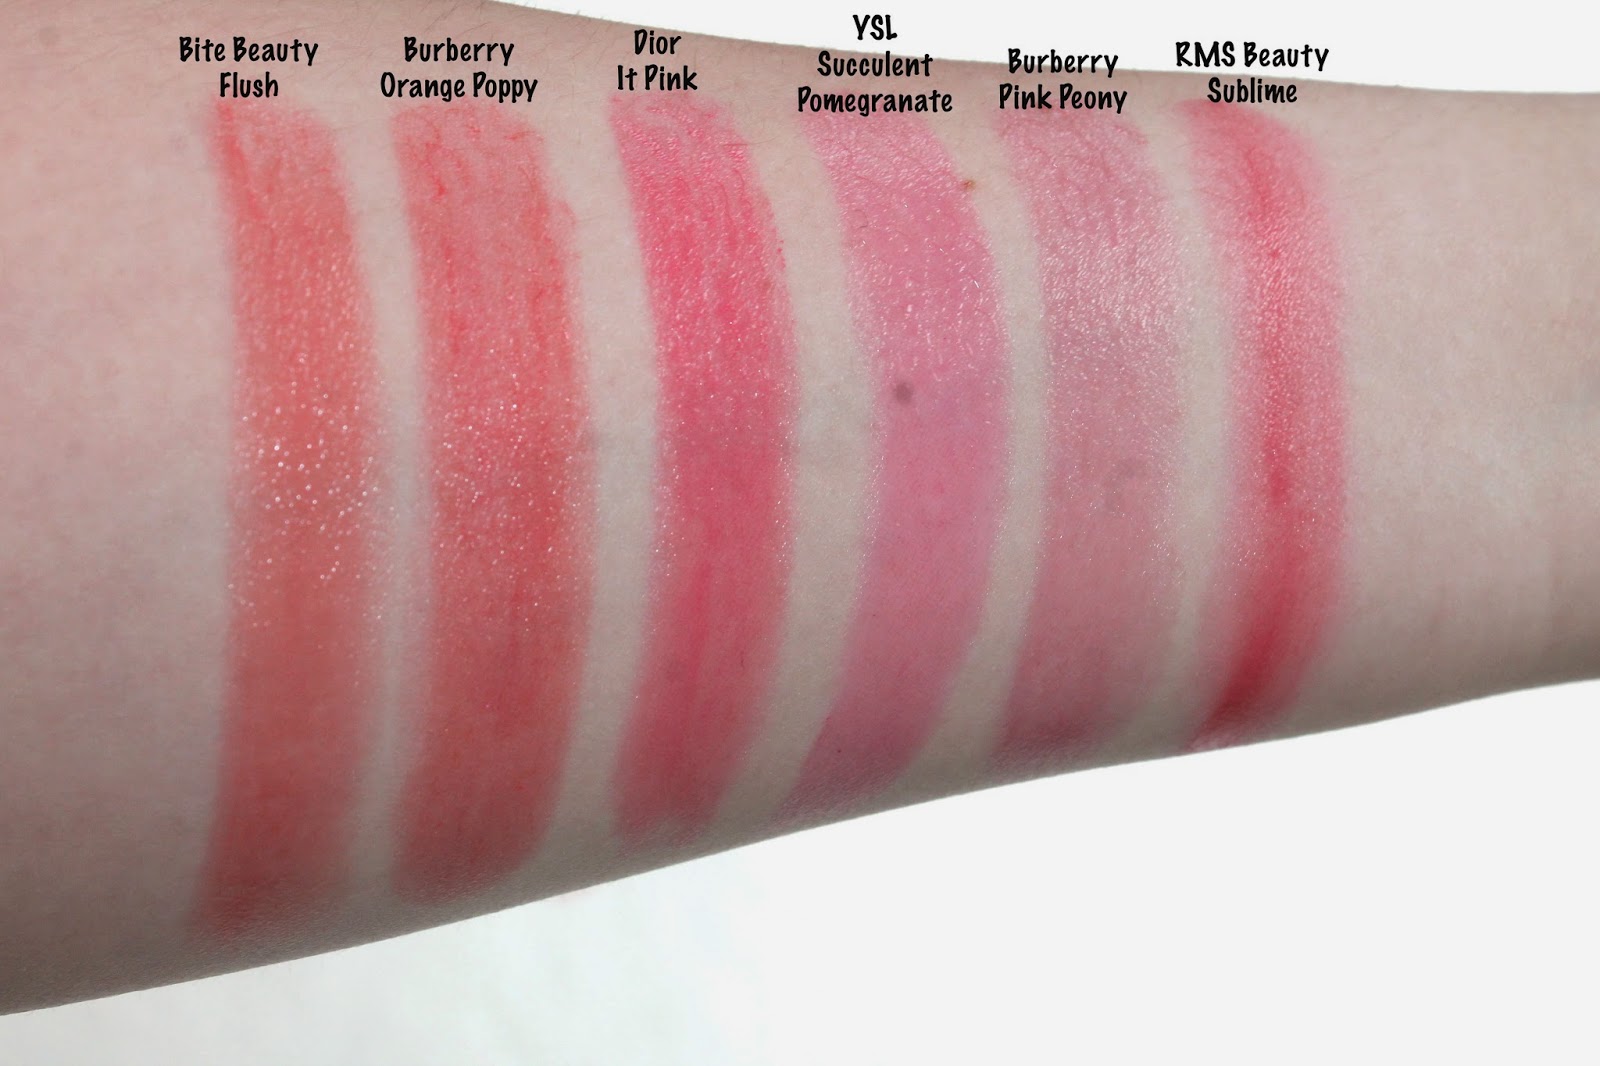 burberry pink peony lipstick